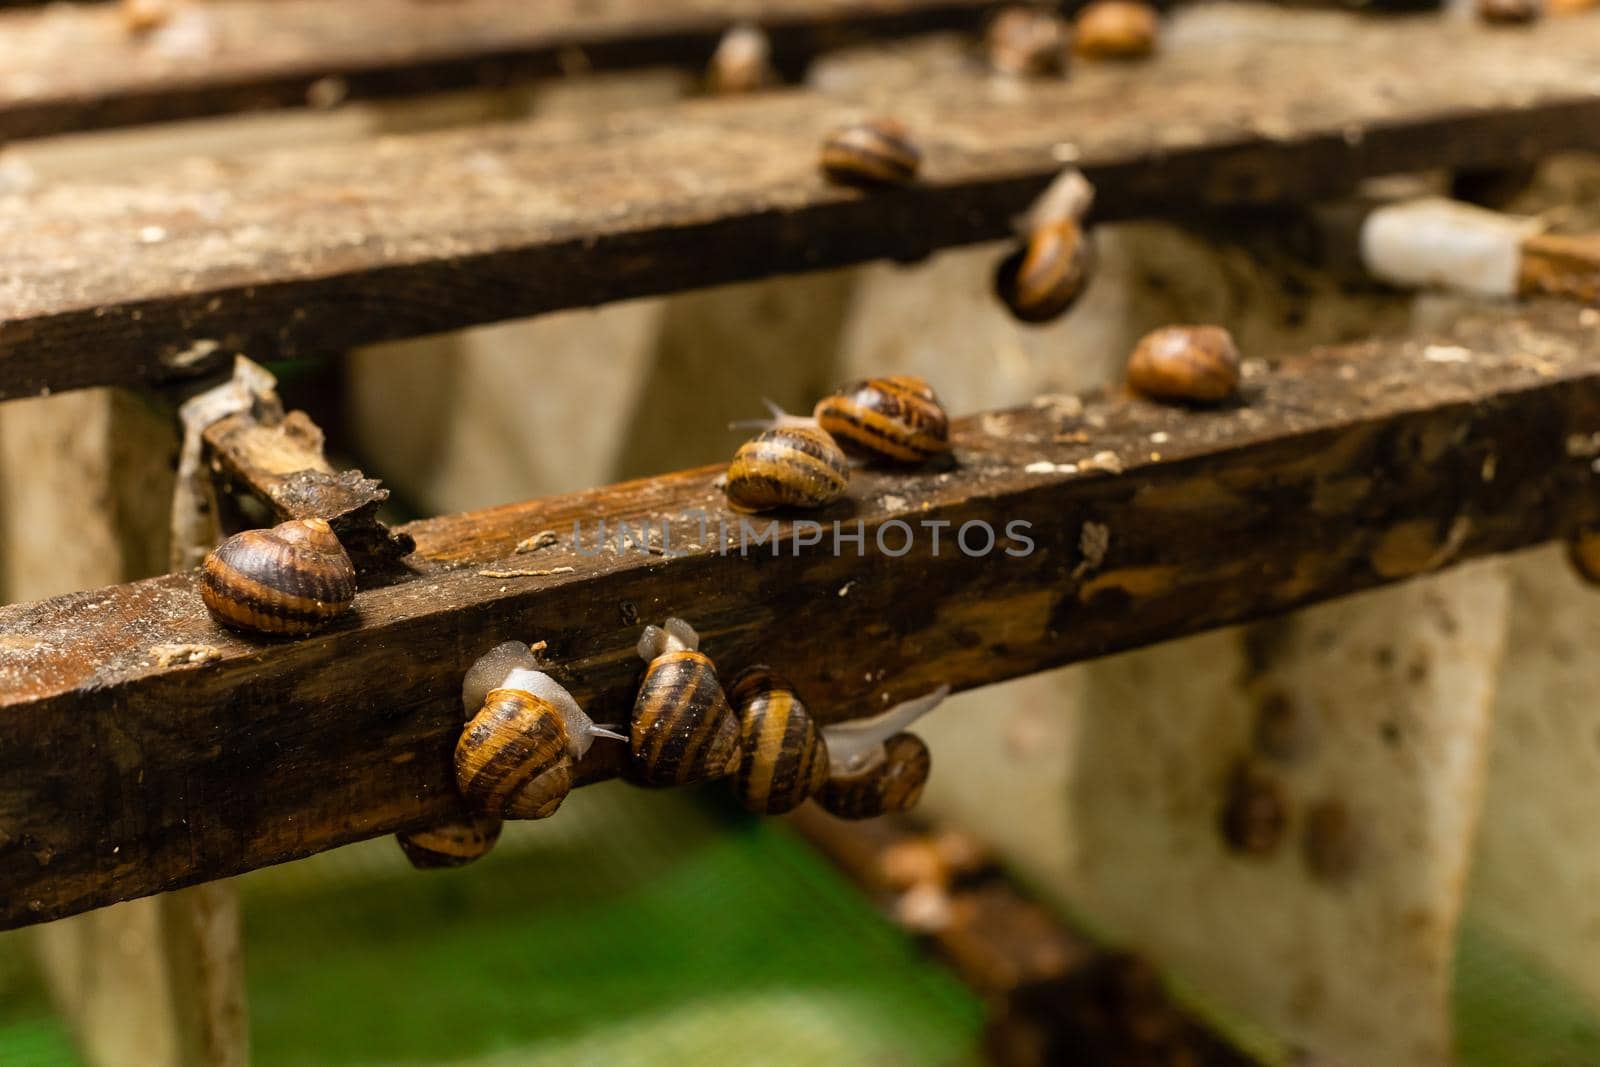 A group of snails. Snail farm by Andelov13